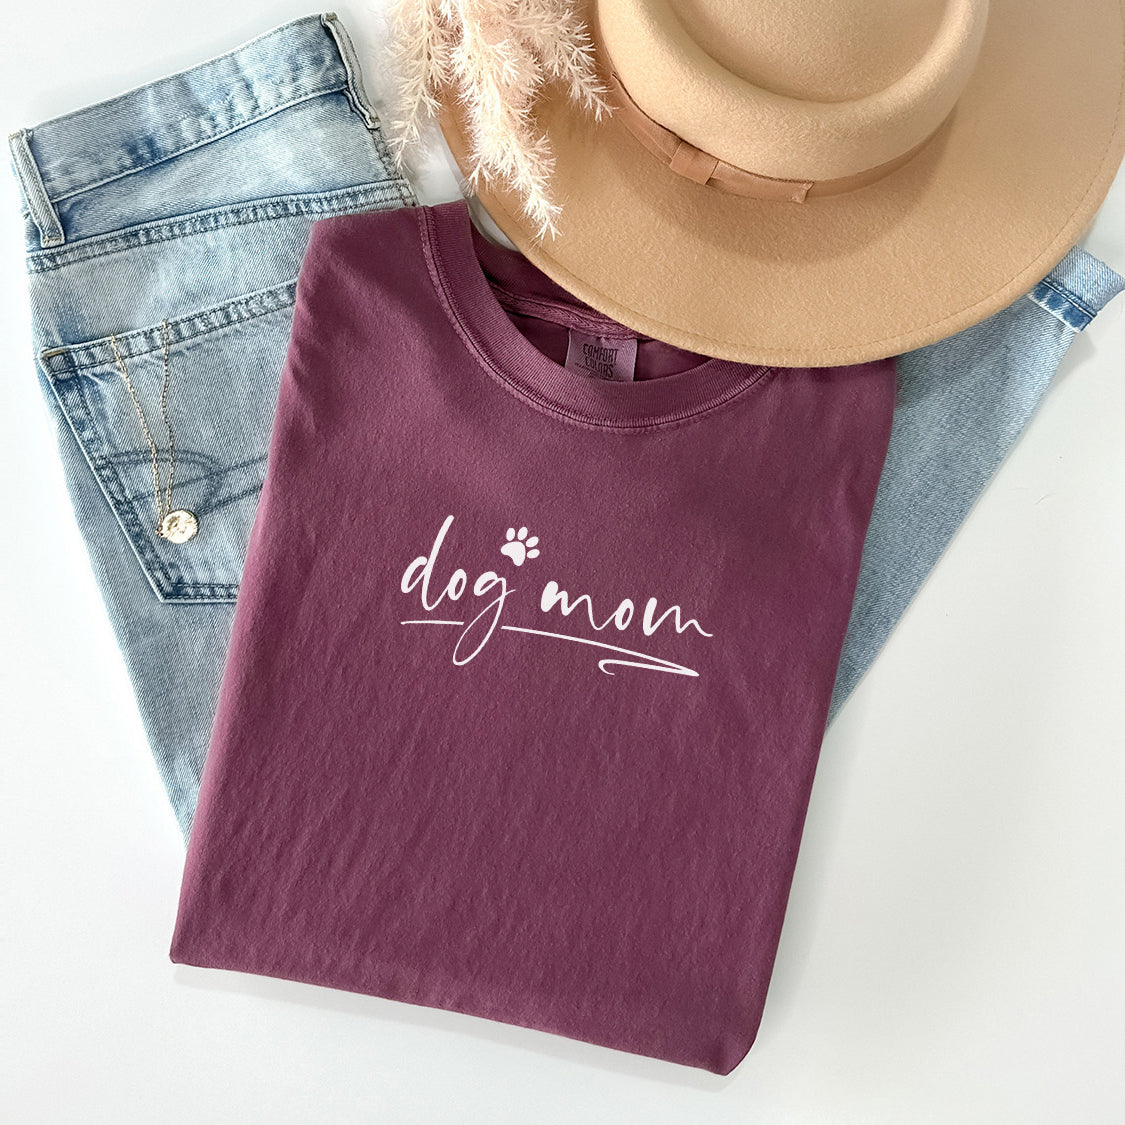 Dog Mom Small Letters T-shirt - Fun Pet Love Minimal Design Printed Garment Dyed Heavyweight Short Sleeve T-Shirt